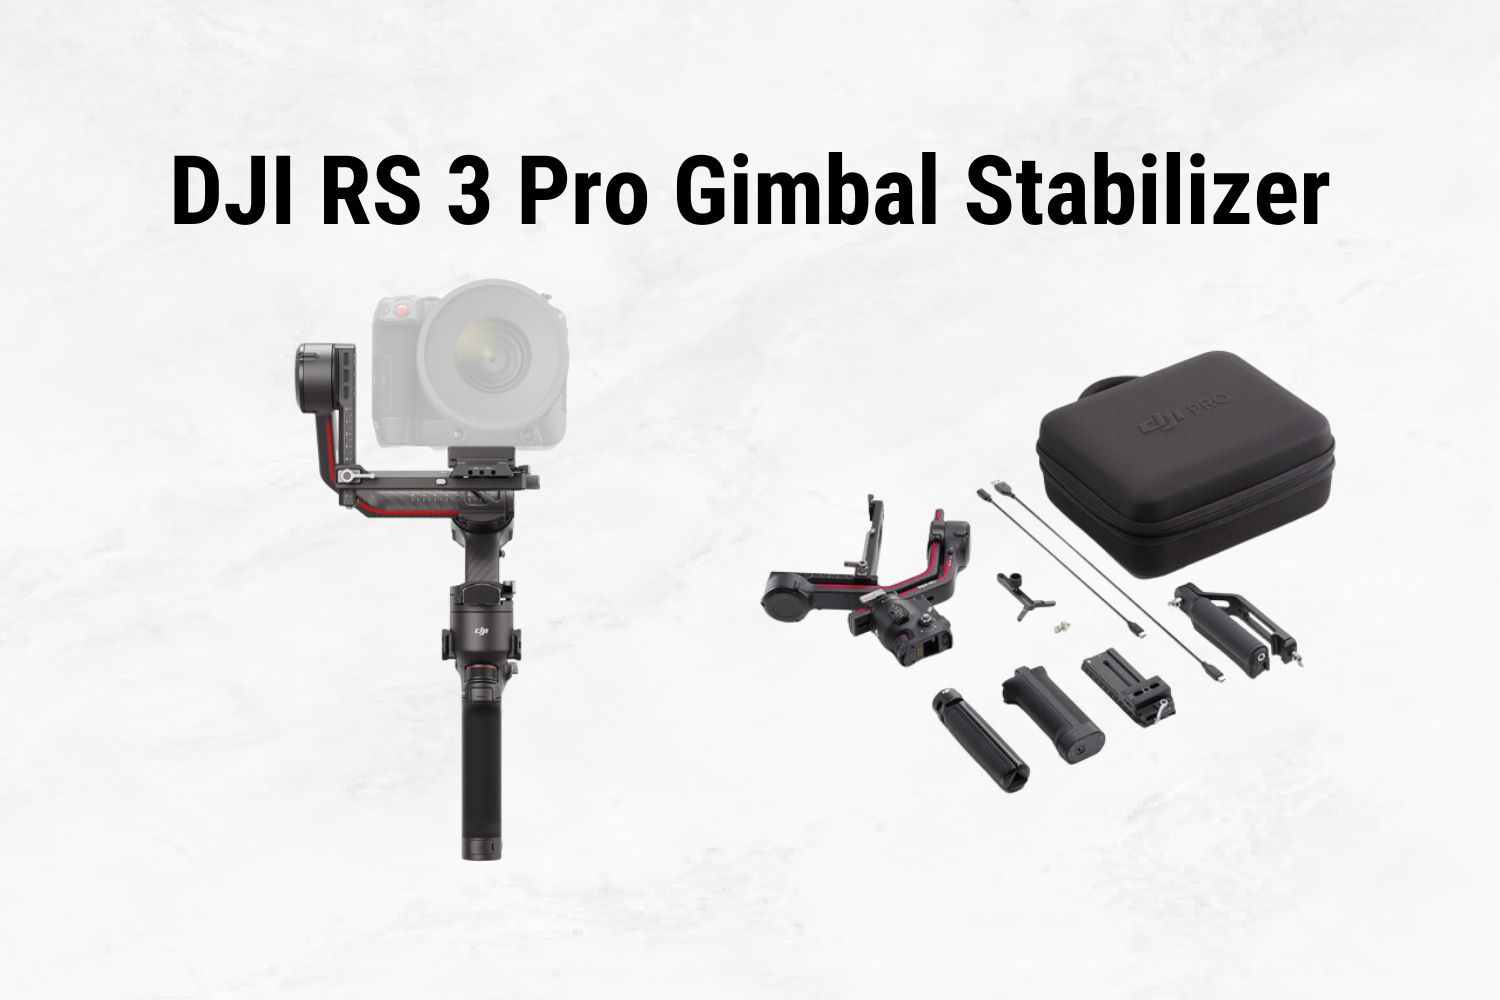 DJI RS 3 Pro Gimbal Stabilizer